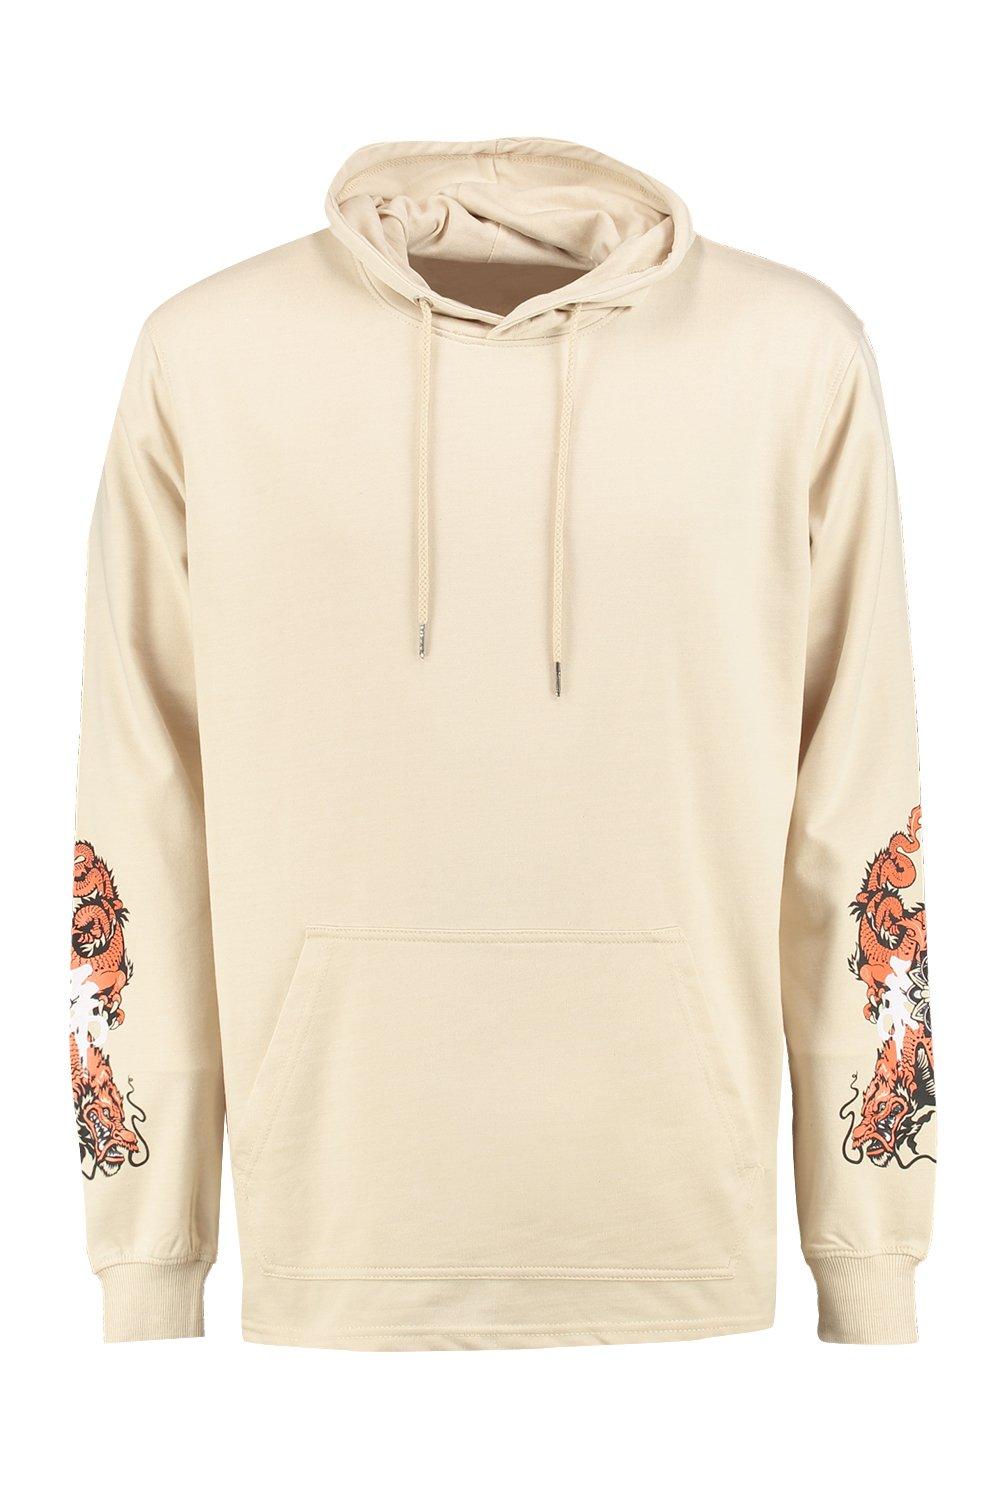 dragon print hoodie